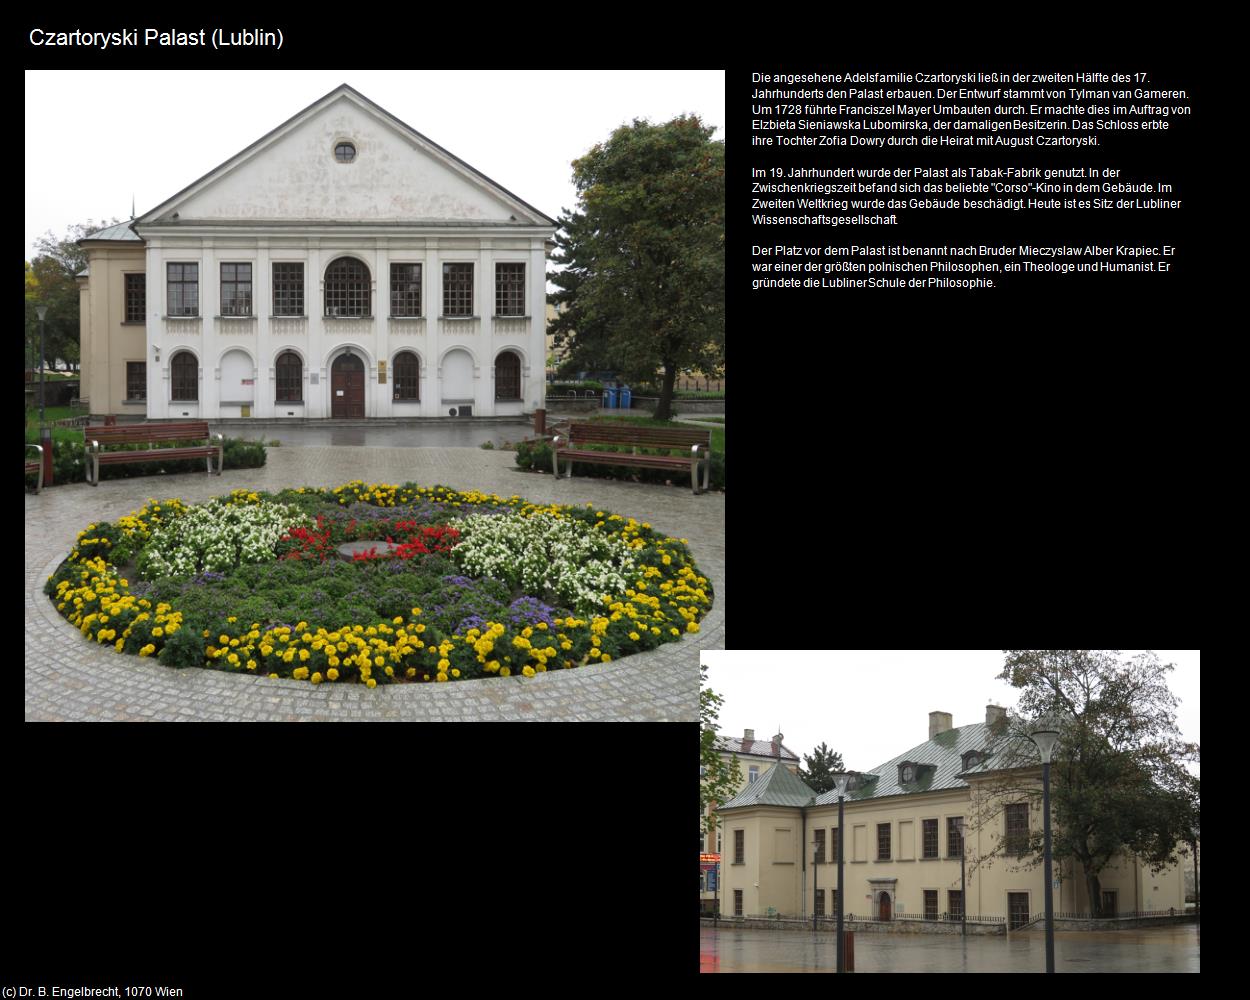 Czartoryski Palast (Lublin) in POLEN-Galizien